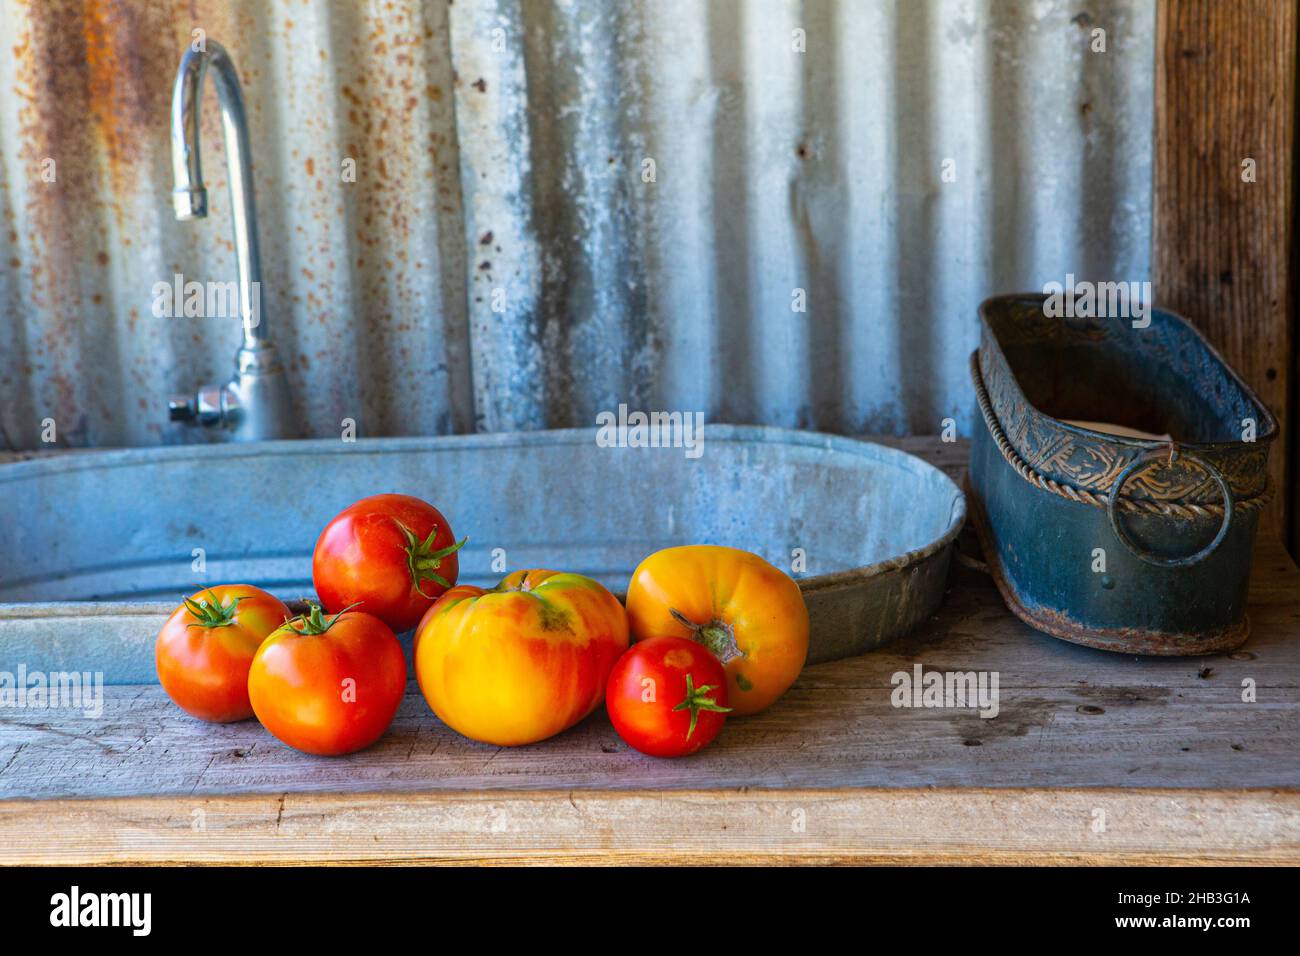 Vegetable Waschstation, Folded Hills Farmstead, Santa Ynez Valley, Kalifornien Stockfoto